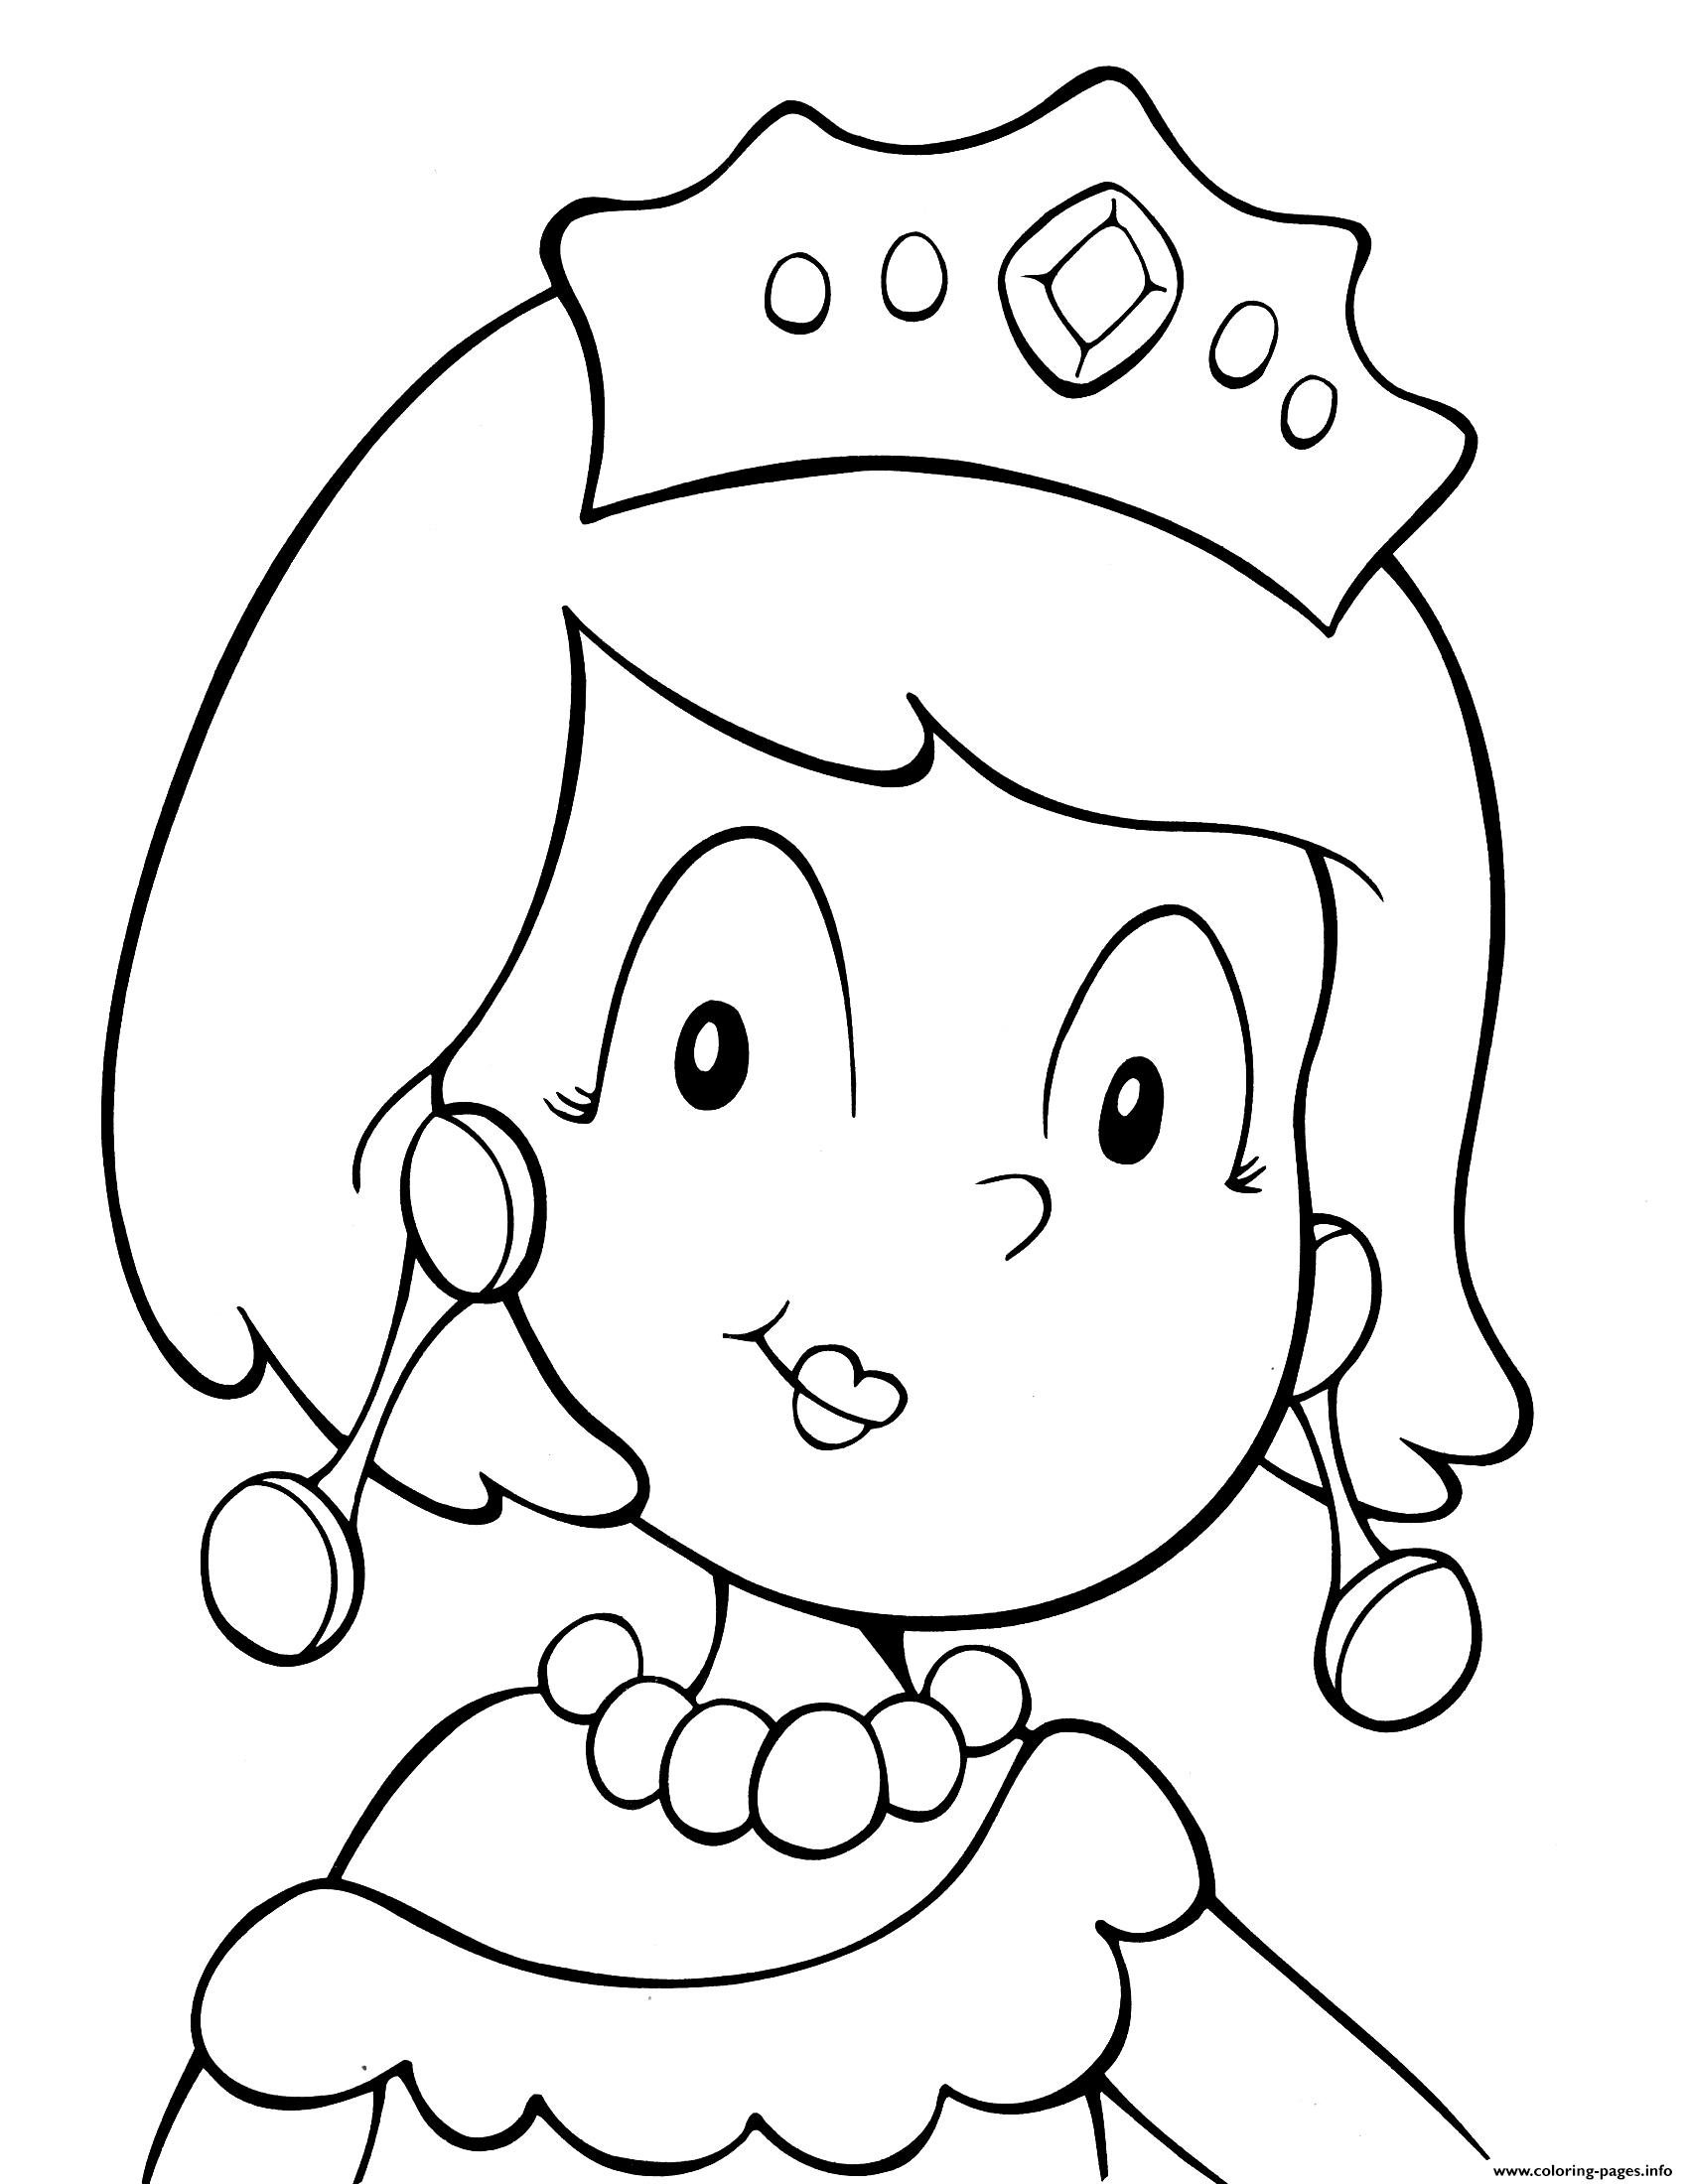 Crayola Princess coloring pages